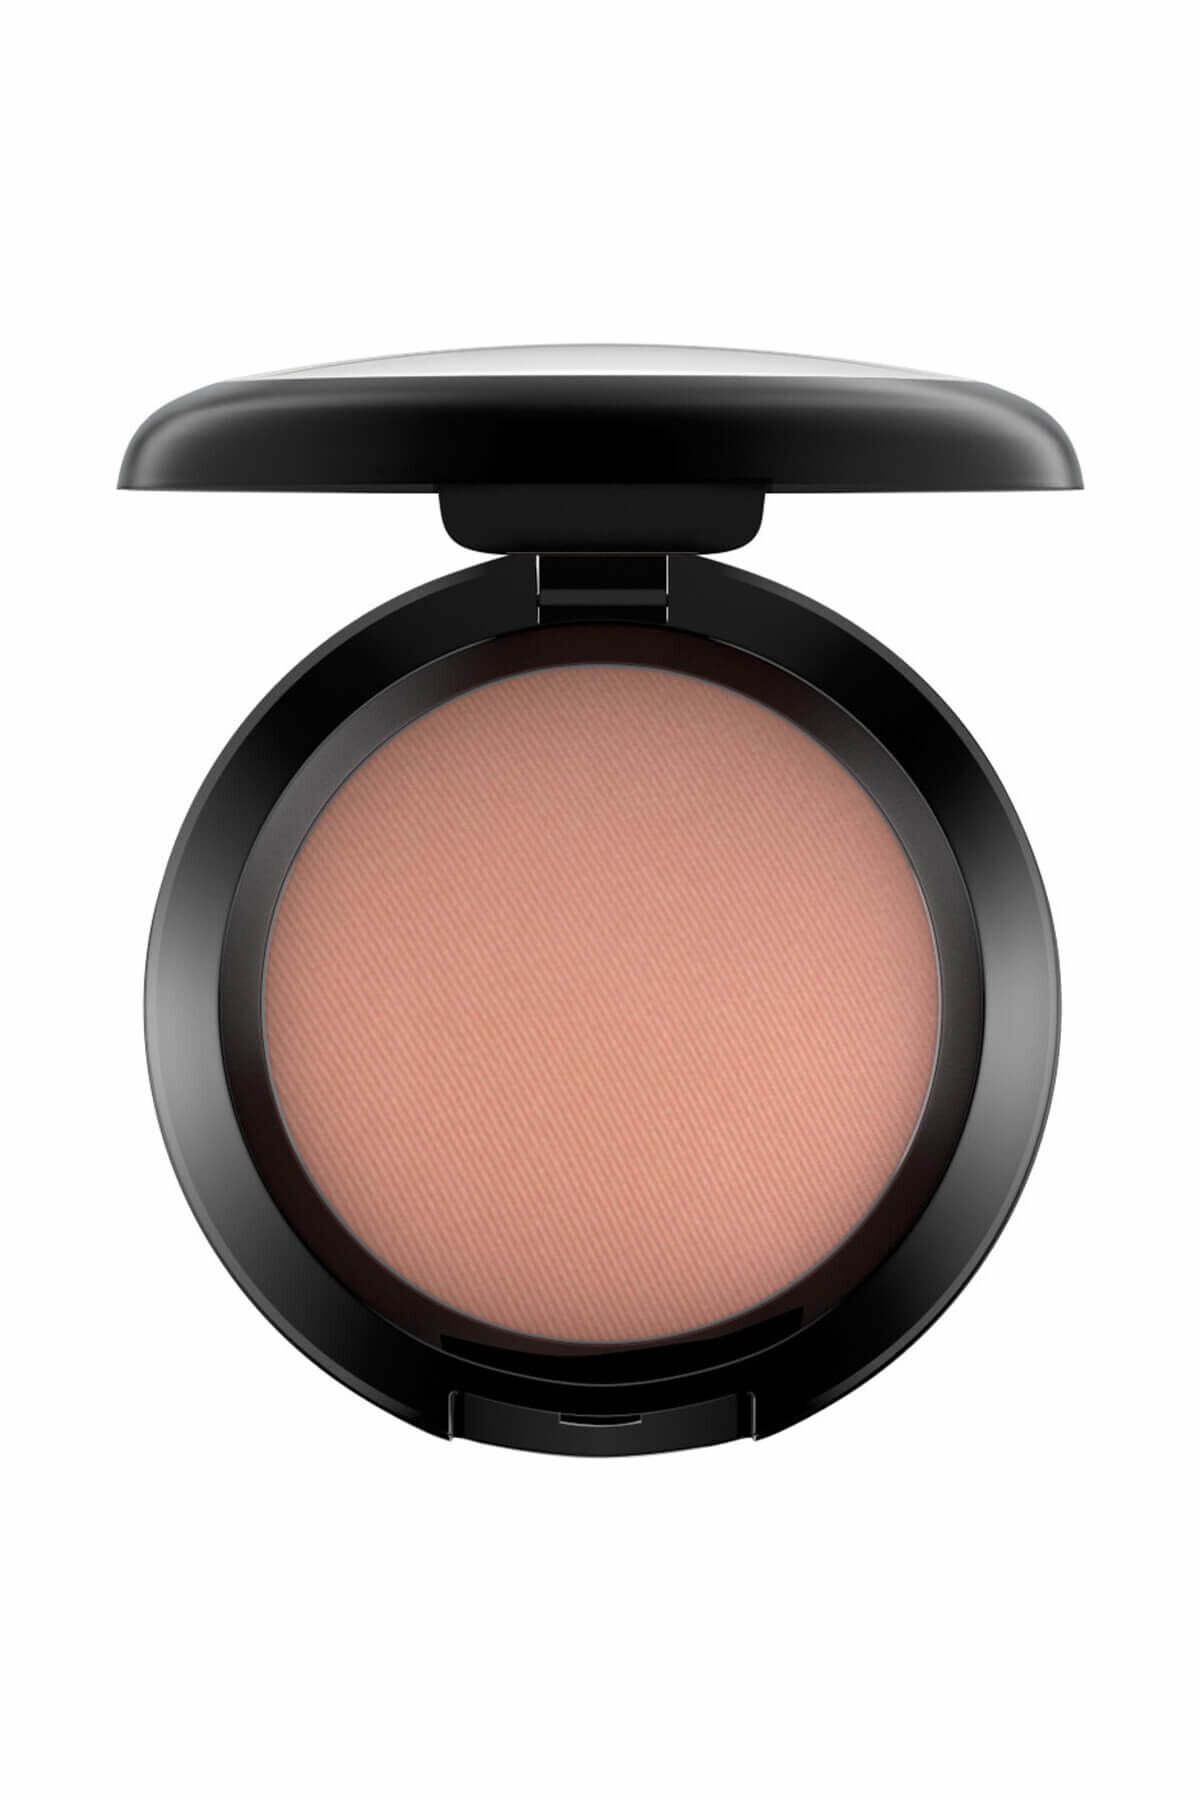 Mac MAC Mükemmel Renk Sağlayan Powder Blush Gingerly Allık - 6 G